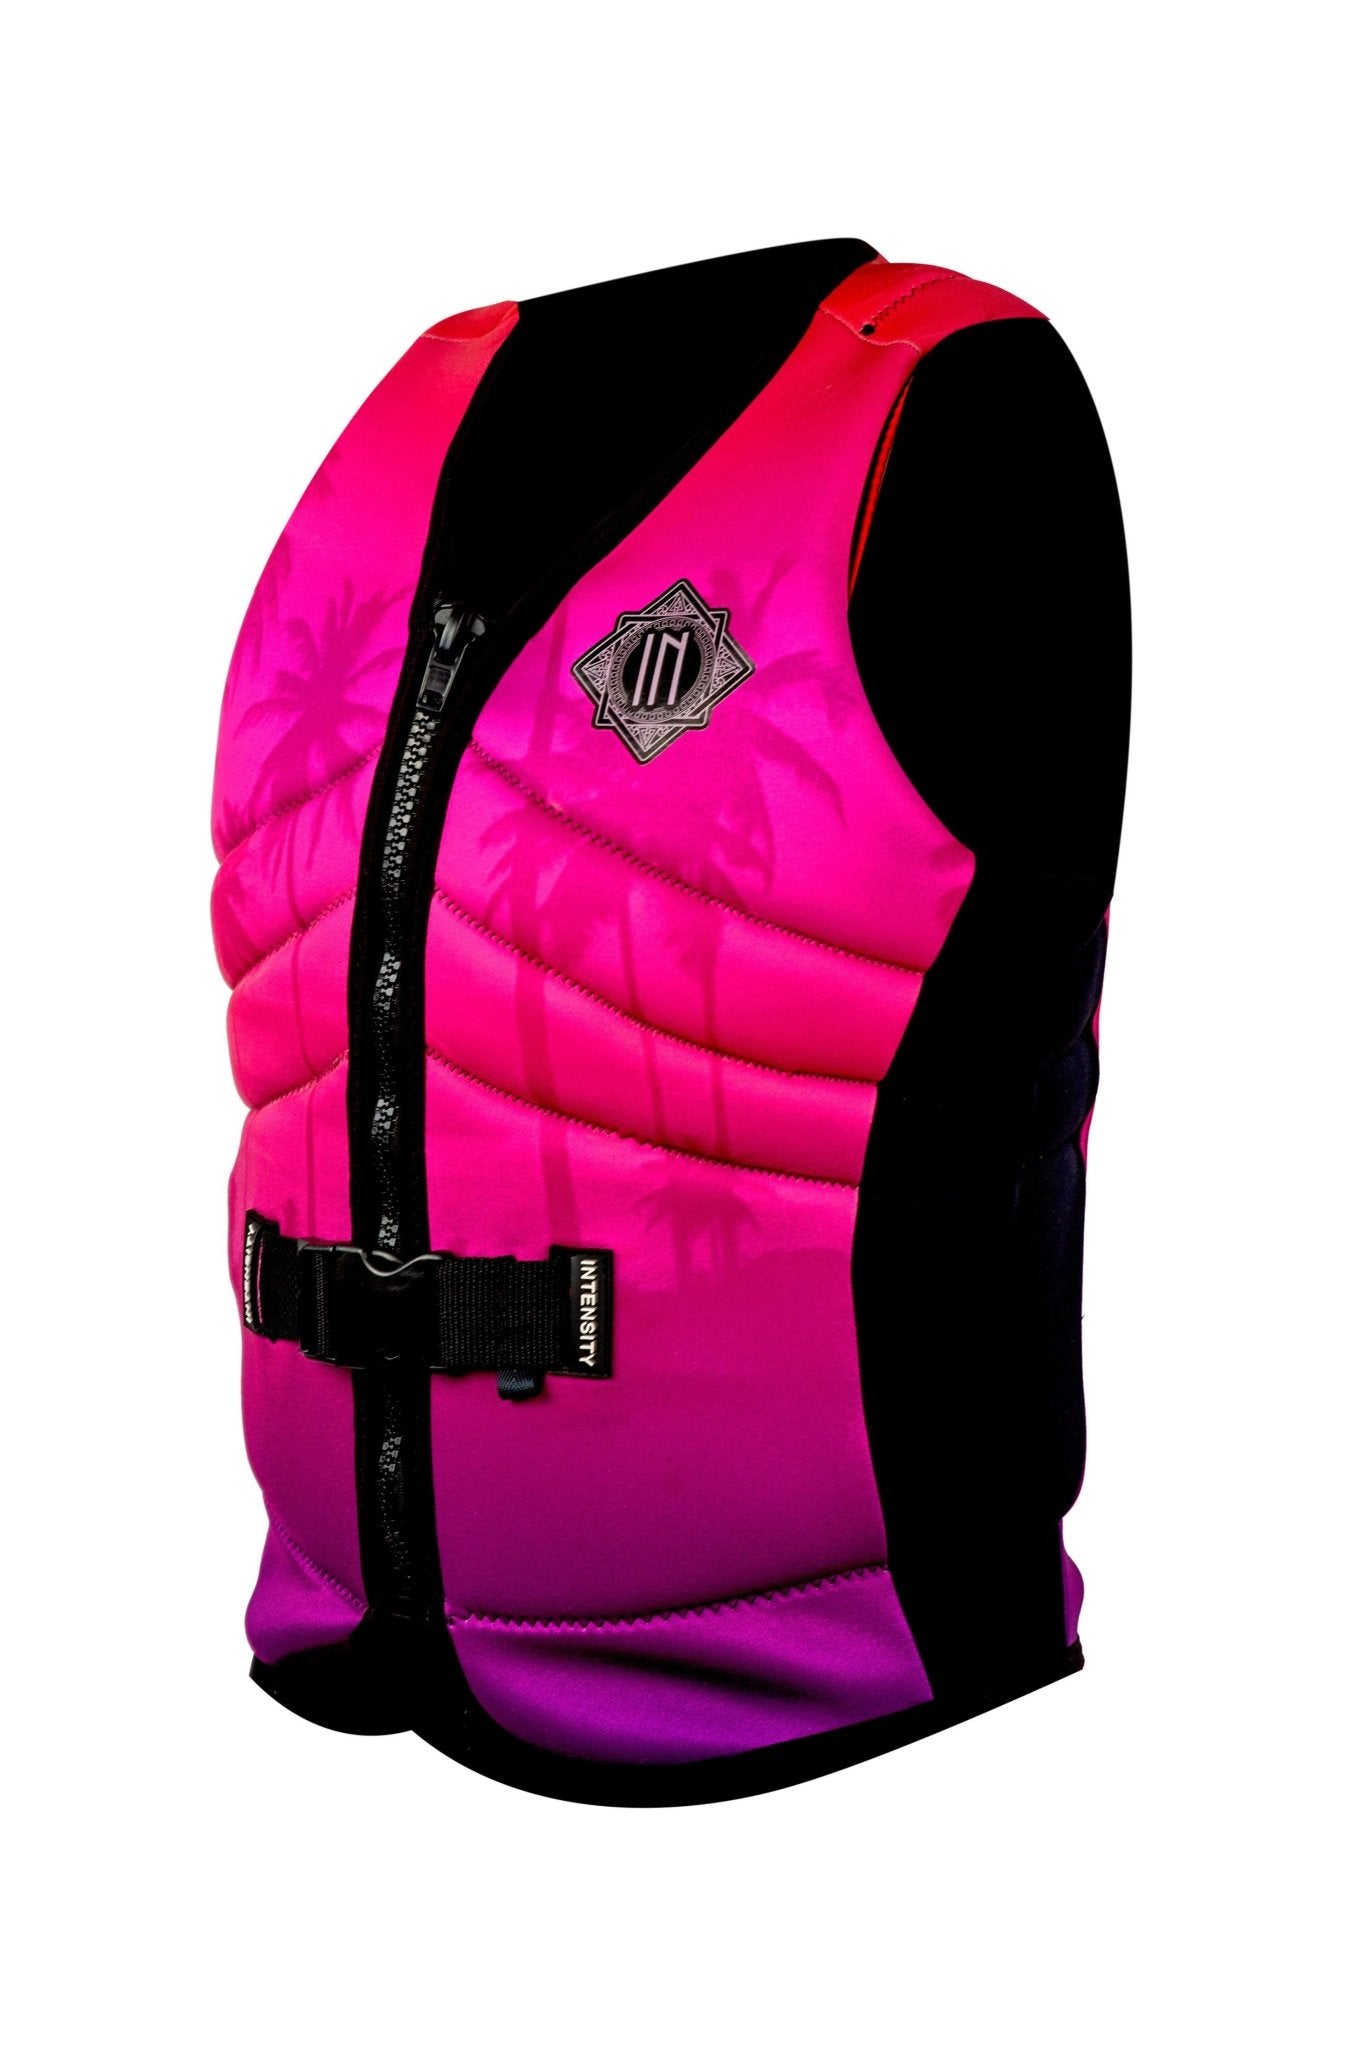 Miami Vest -Williams20IA8320-6-Black/Pink